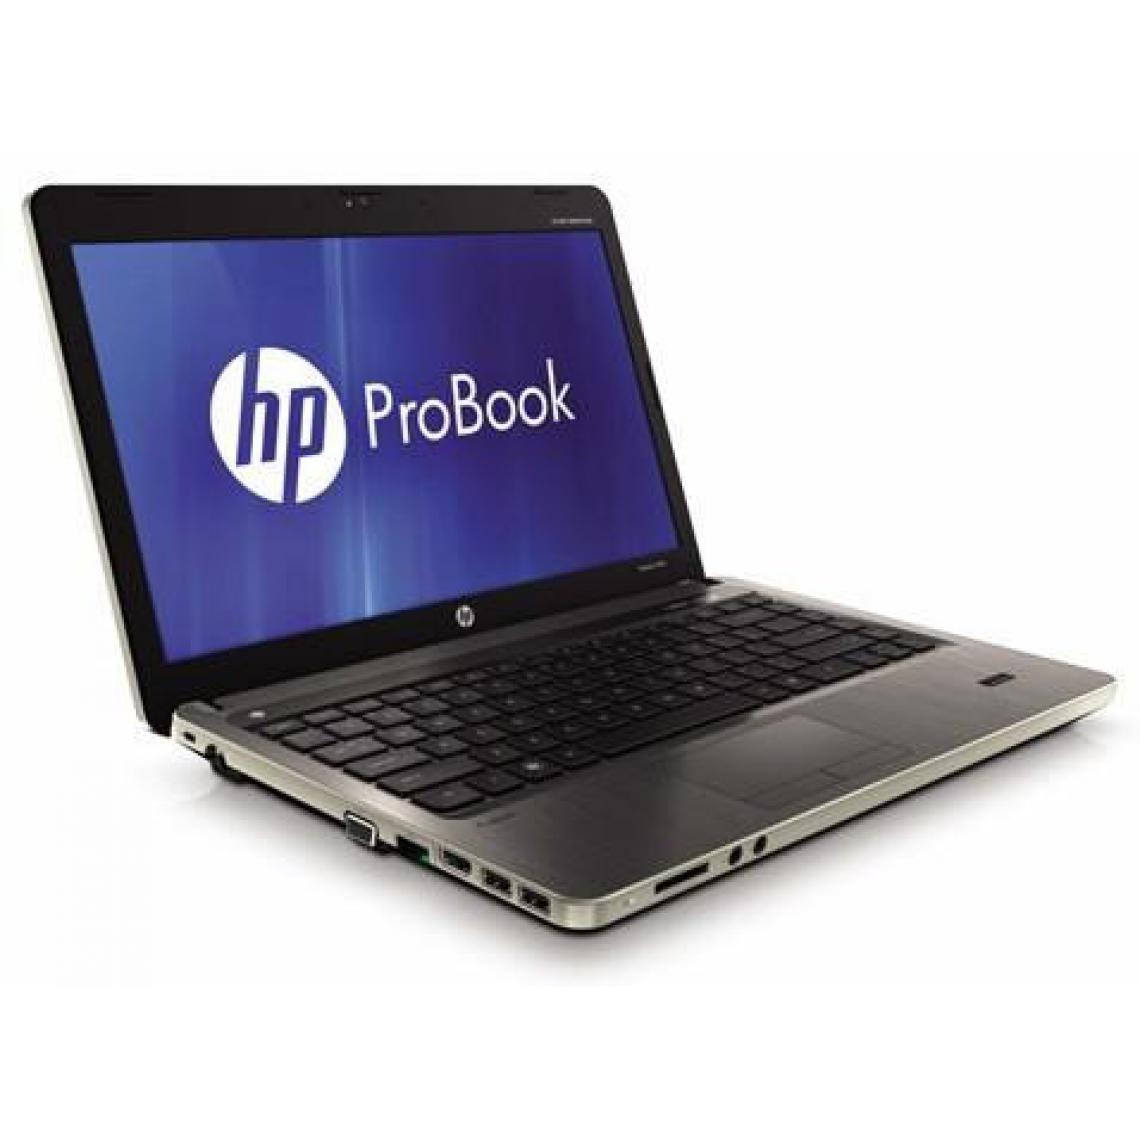 Hp - HP 6460B (6460B8128i5) - PC Portable